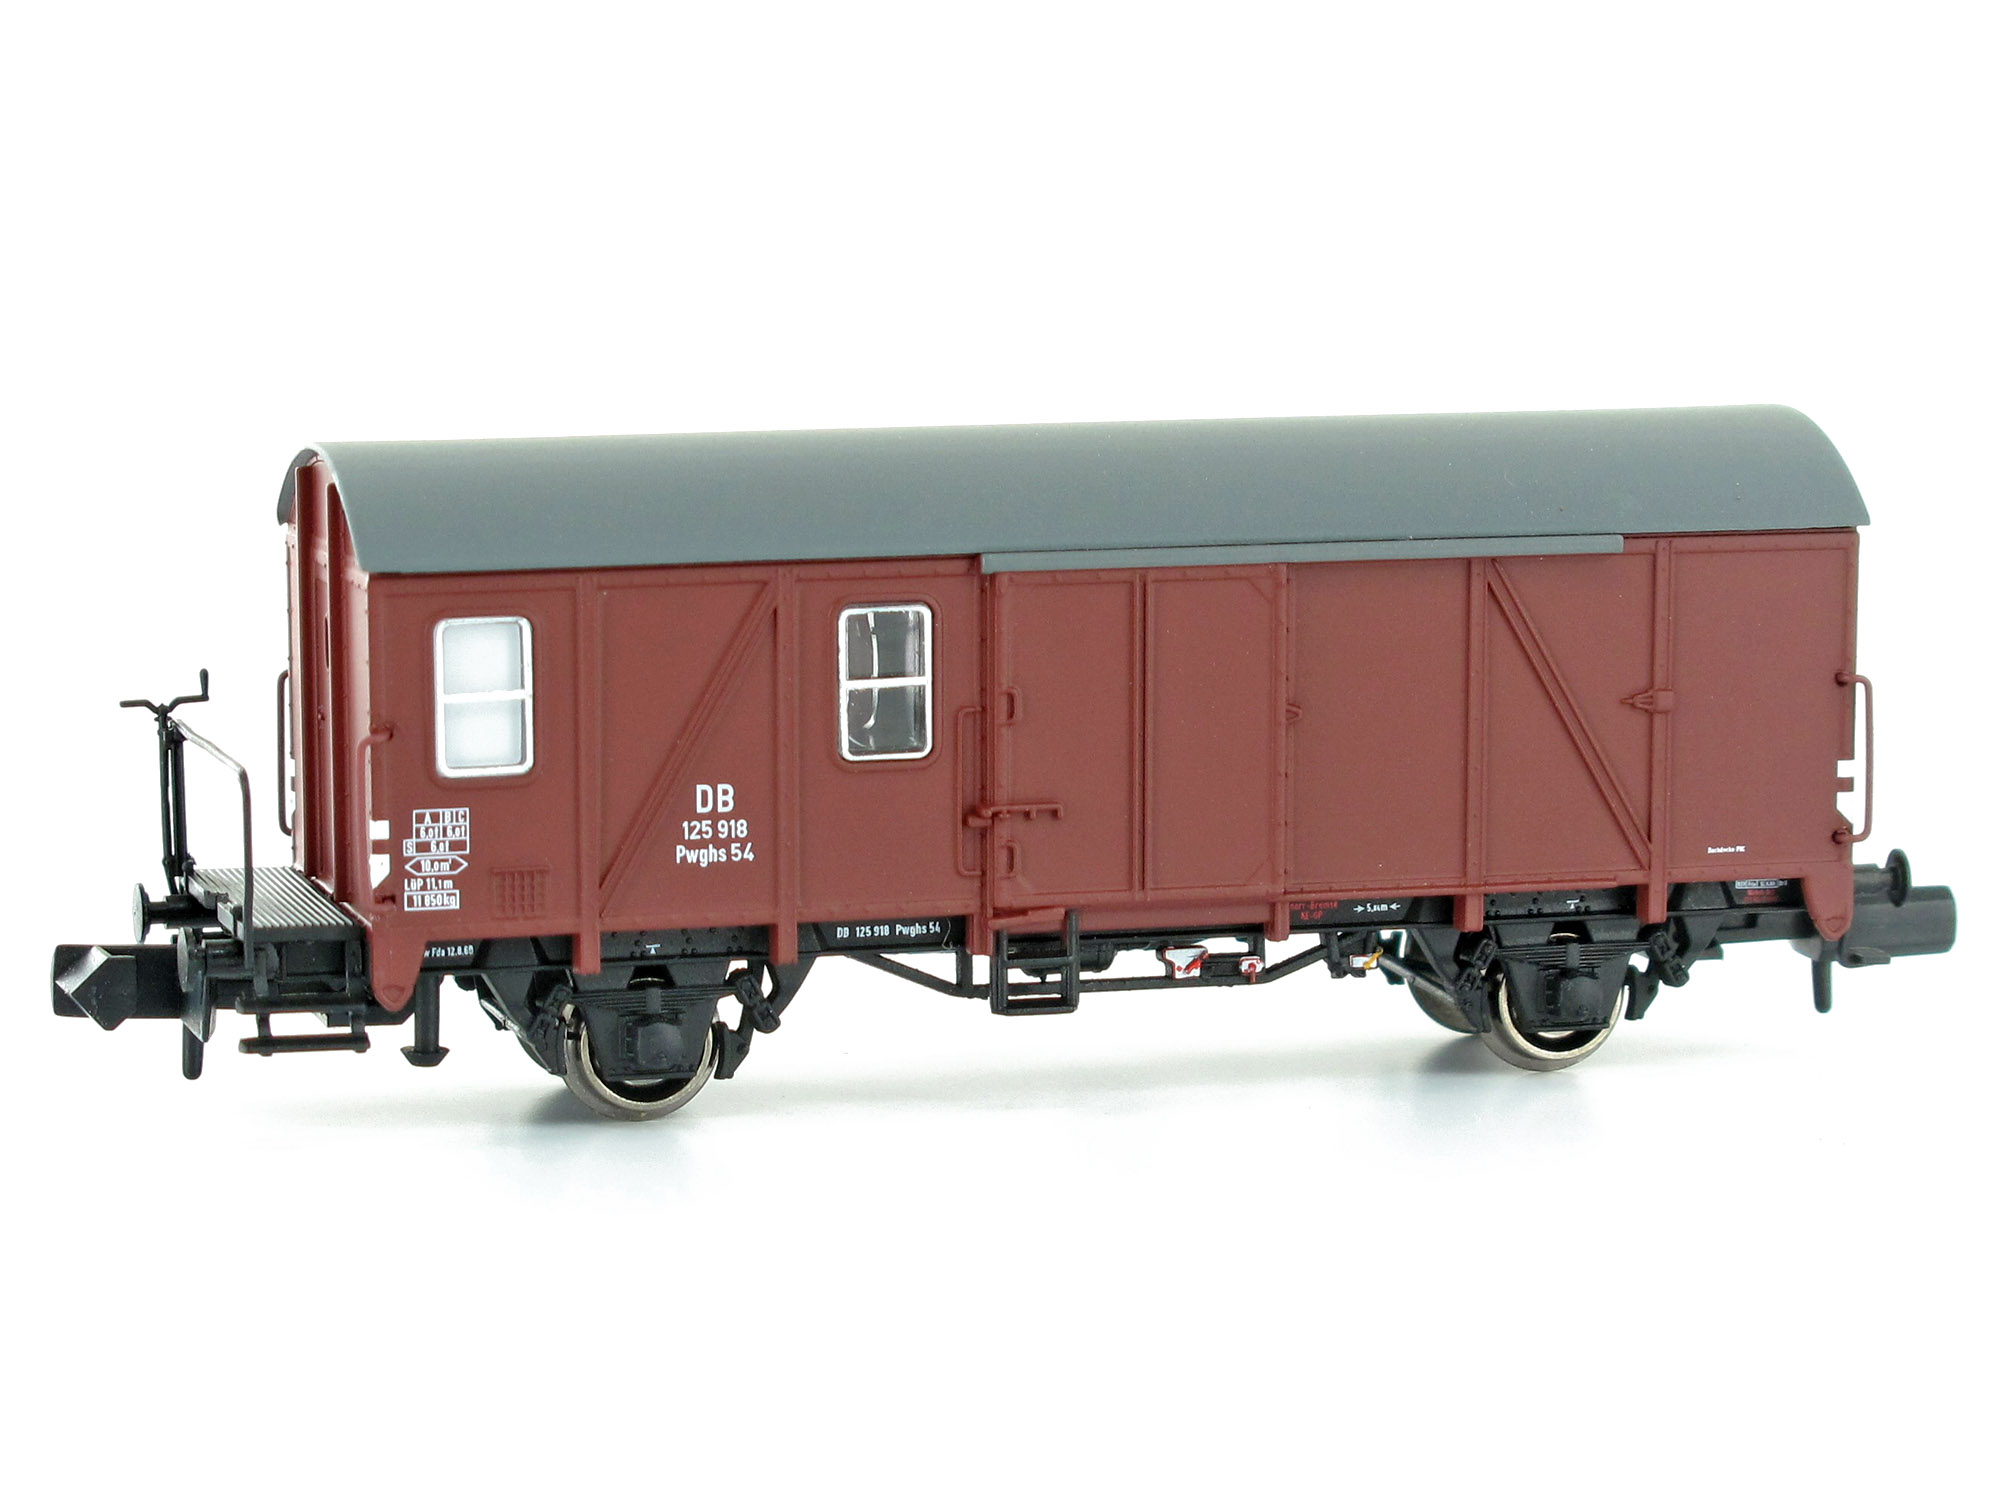 N Scale - Modellbahn Union - MU_N-G55002 - Baggage Car, Pwghs 054 - Deutsche Bundesbahn - 125 918